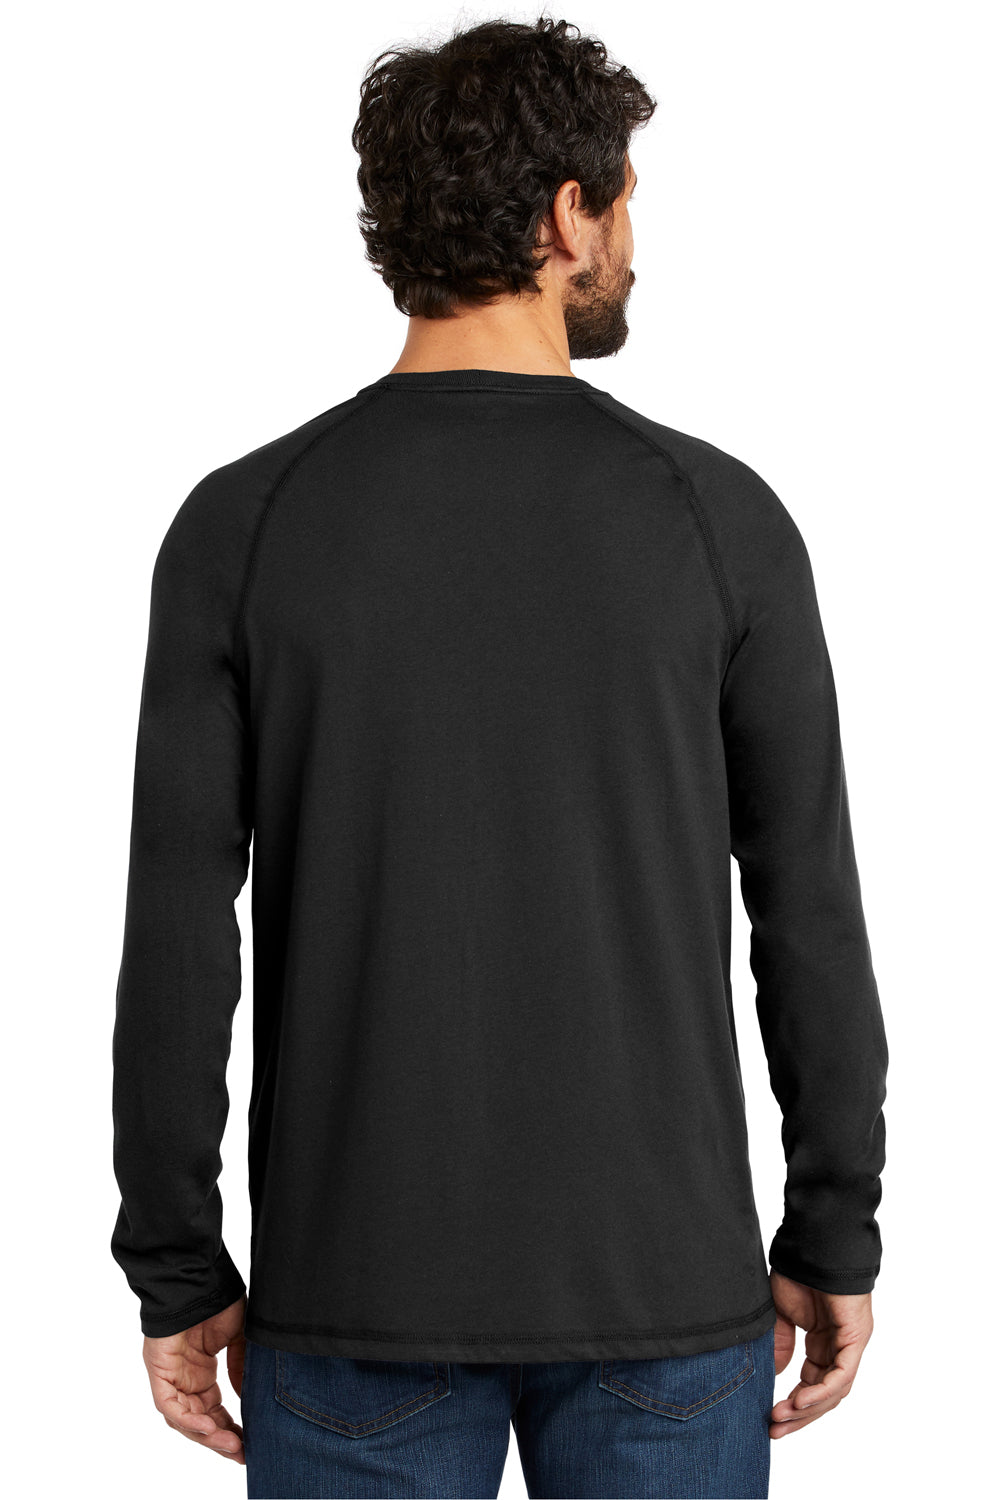 Carhartt CT100393 Mens Delmont Moisture Wicking Long Sleeve Crewneck T-Shirt w/ Pocket Black Back